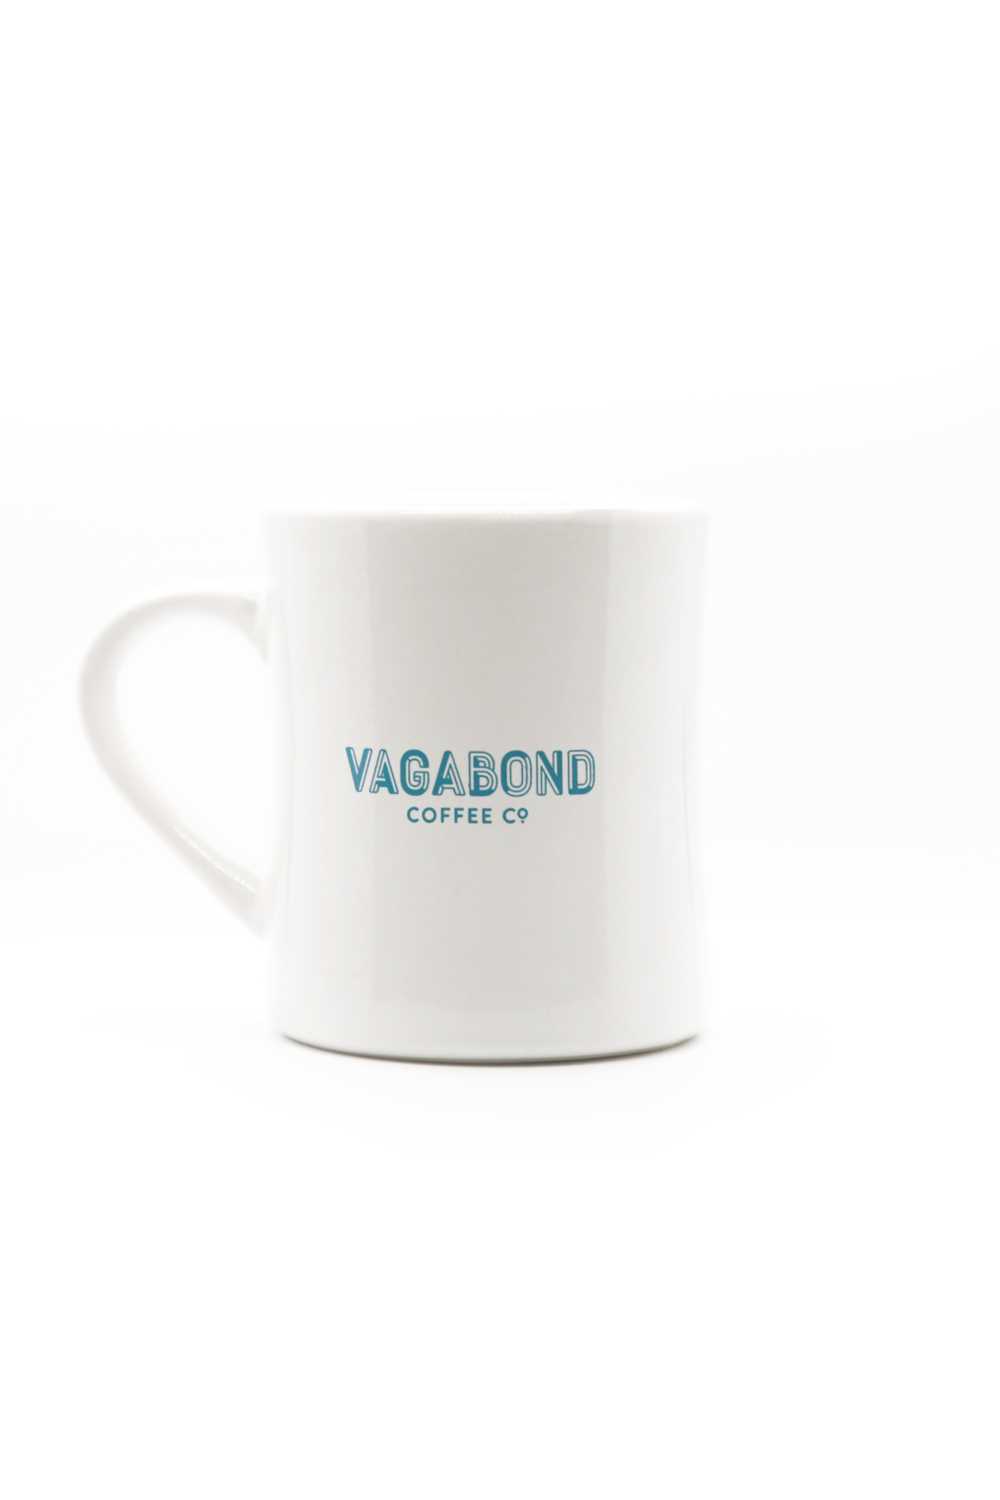 Vagabond Canvas Pack — Vagabond Coffee Co.